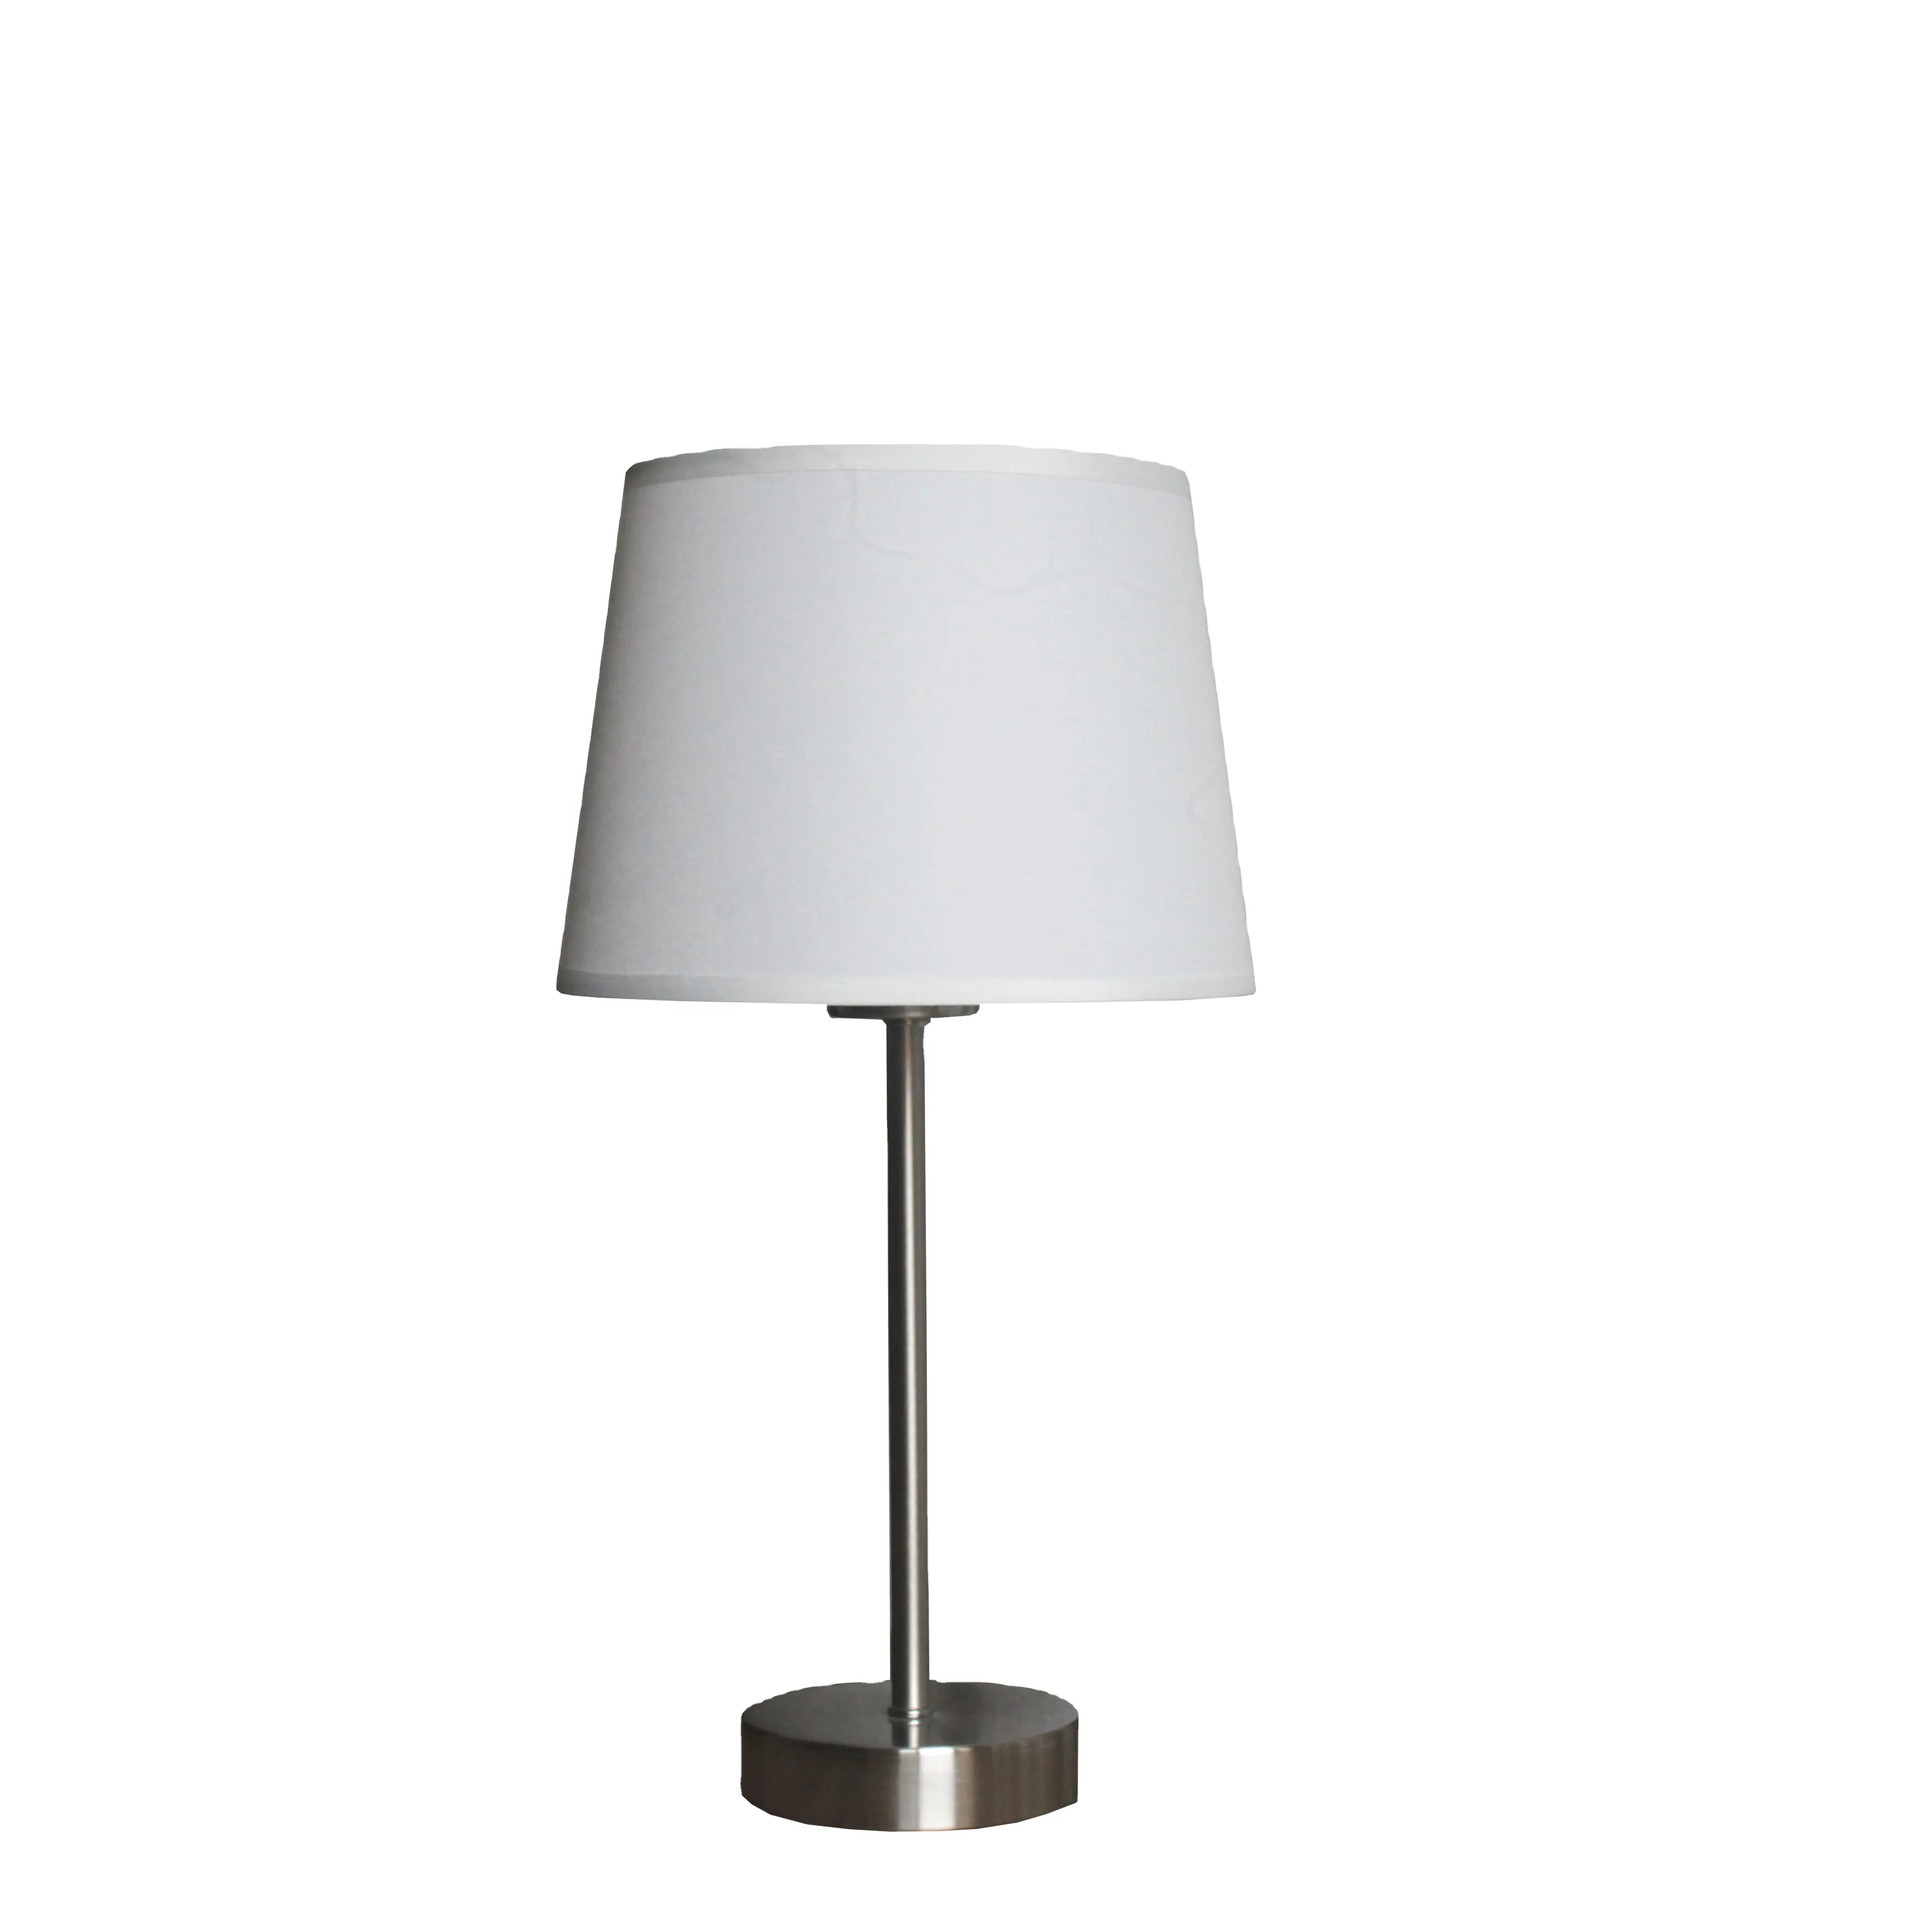 Wholesale modern promotion table lamp bedroom living room table lighting lamp